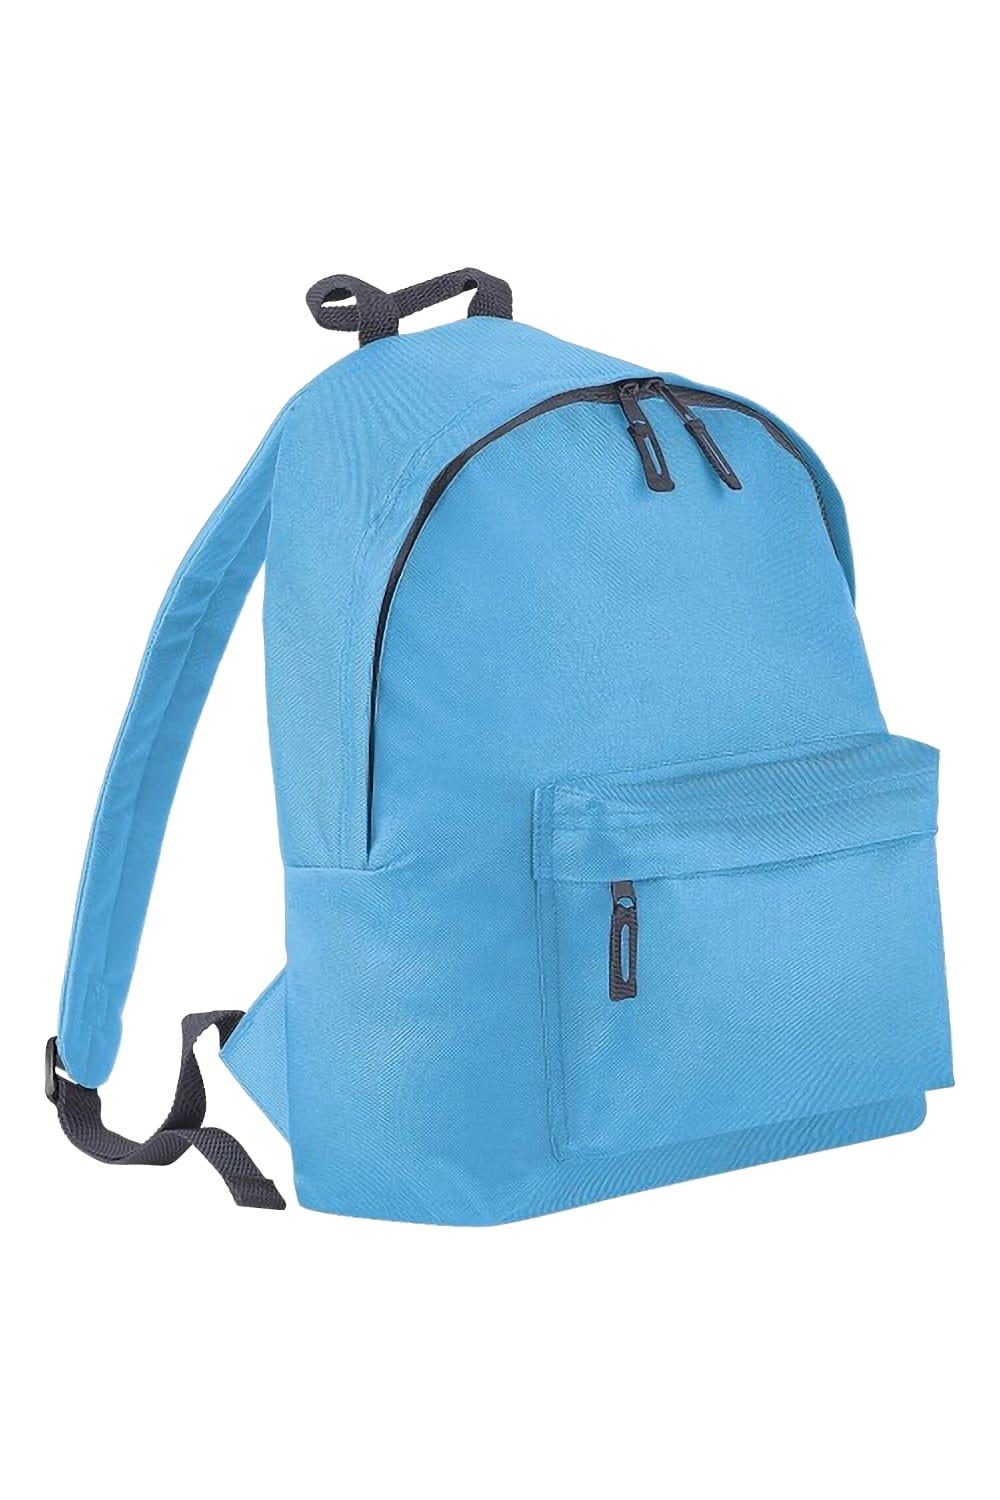 Junior Fashion Backpack / Rucksack 14 Liters - Surf Blue/Graphite Grey